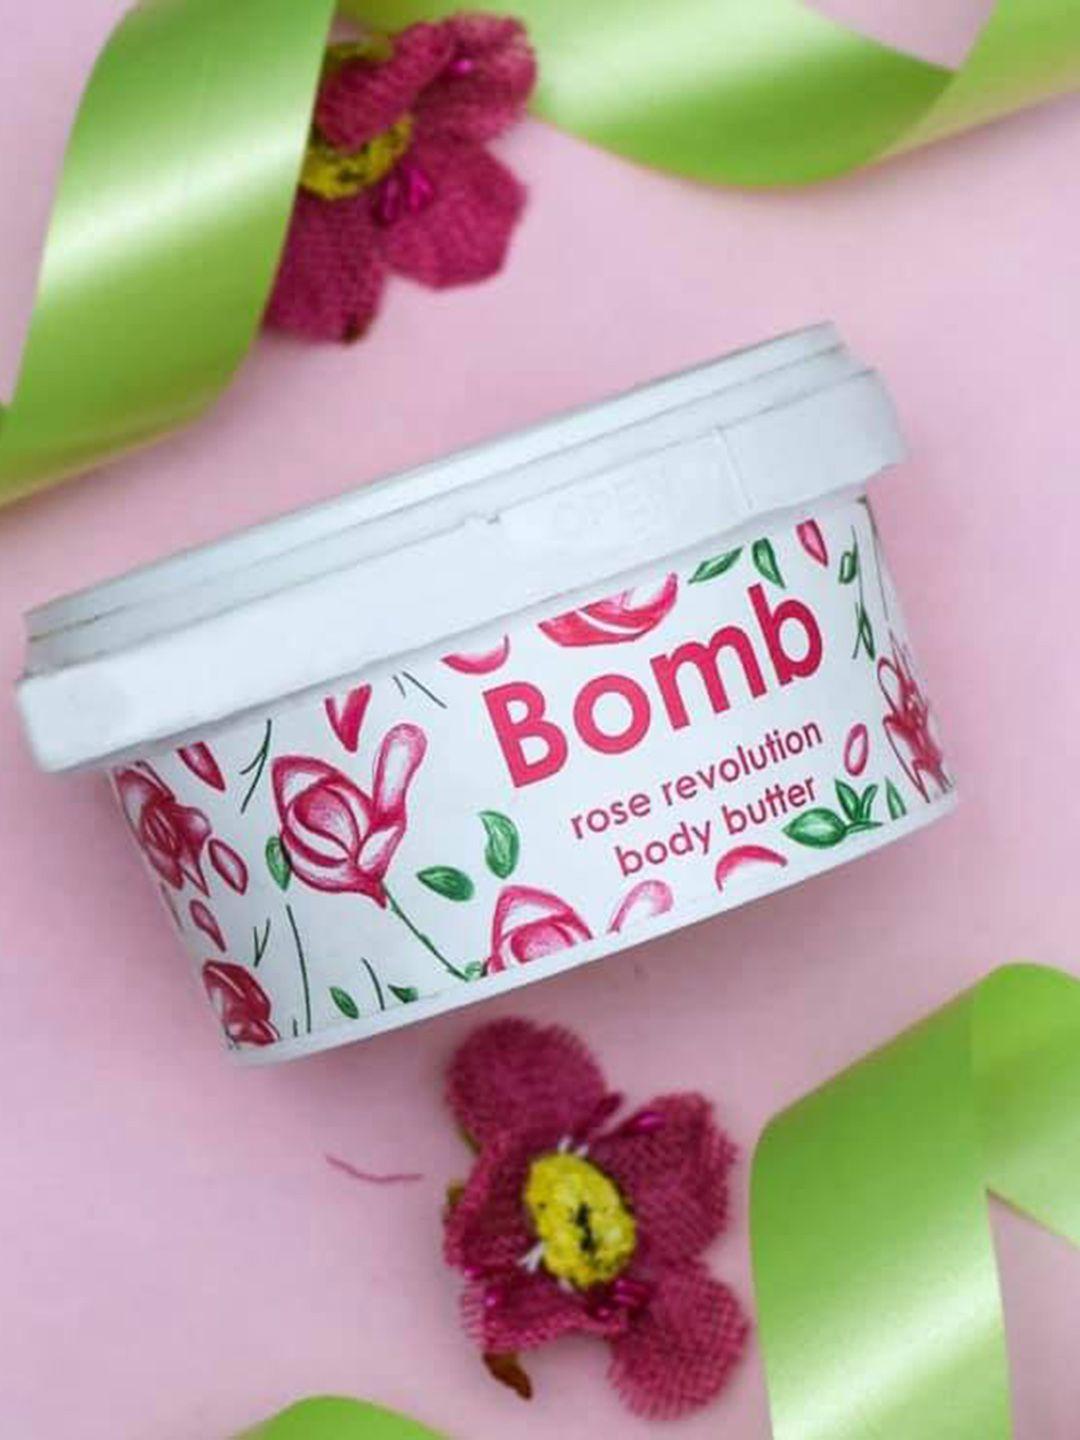 bomb cosmetics rose revolution body butter - 200 ml